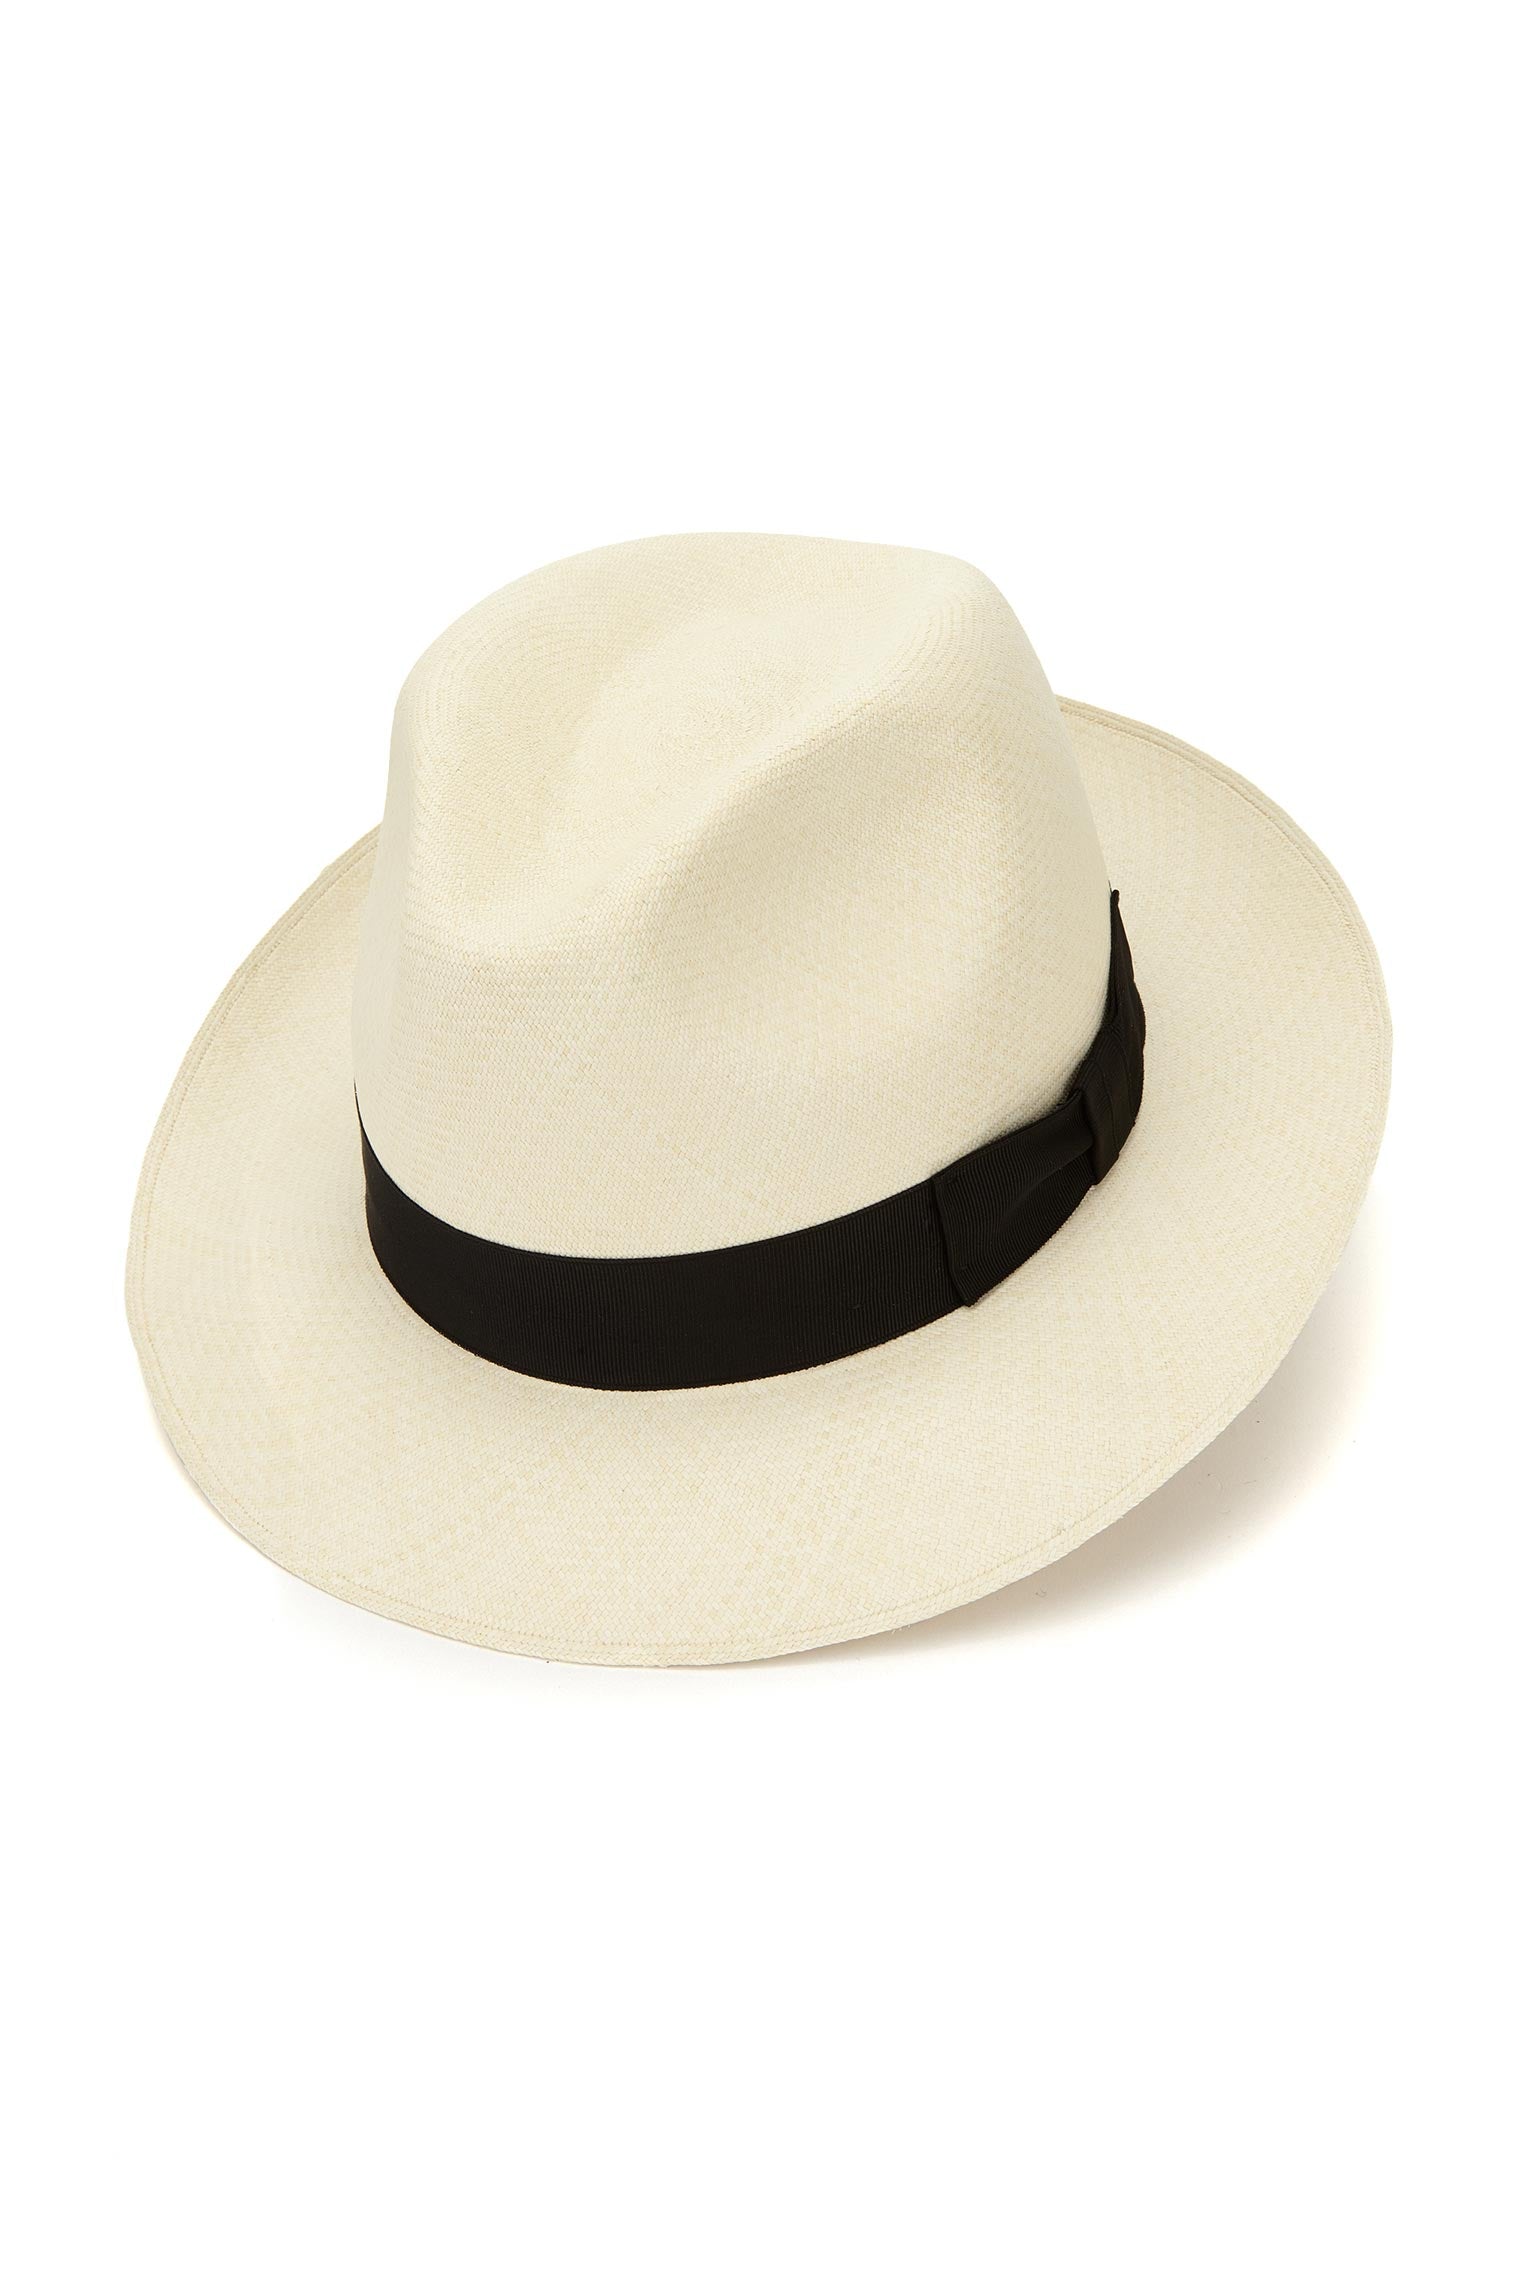 Superfino Montecristi Panama - Men's Hats - Lock & Co. Hatters London UK